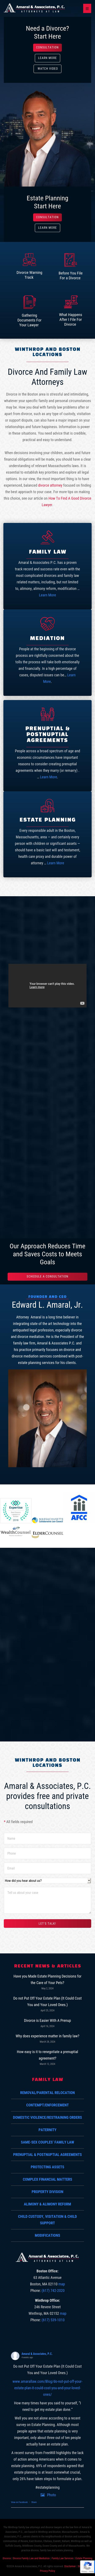 Amaral & Associates, P.C. - Winthrop MA Lawyers